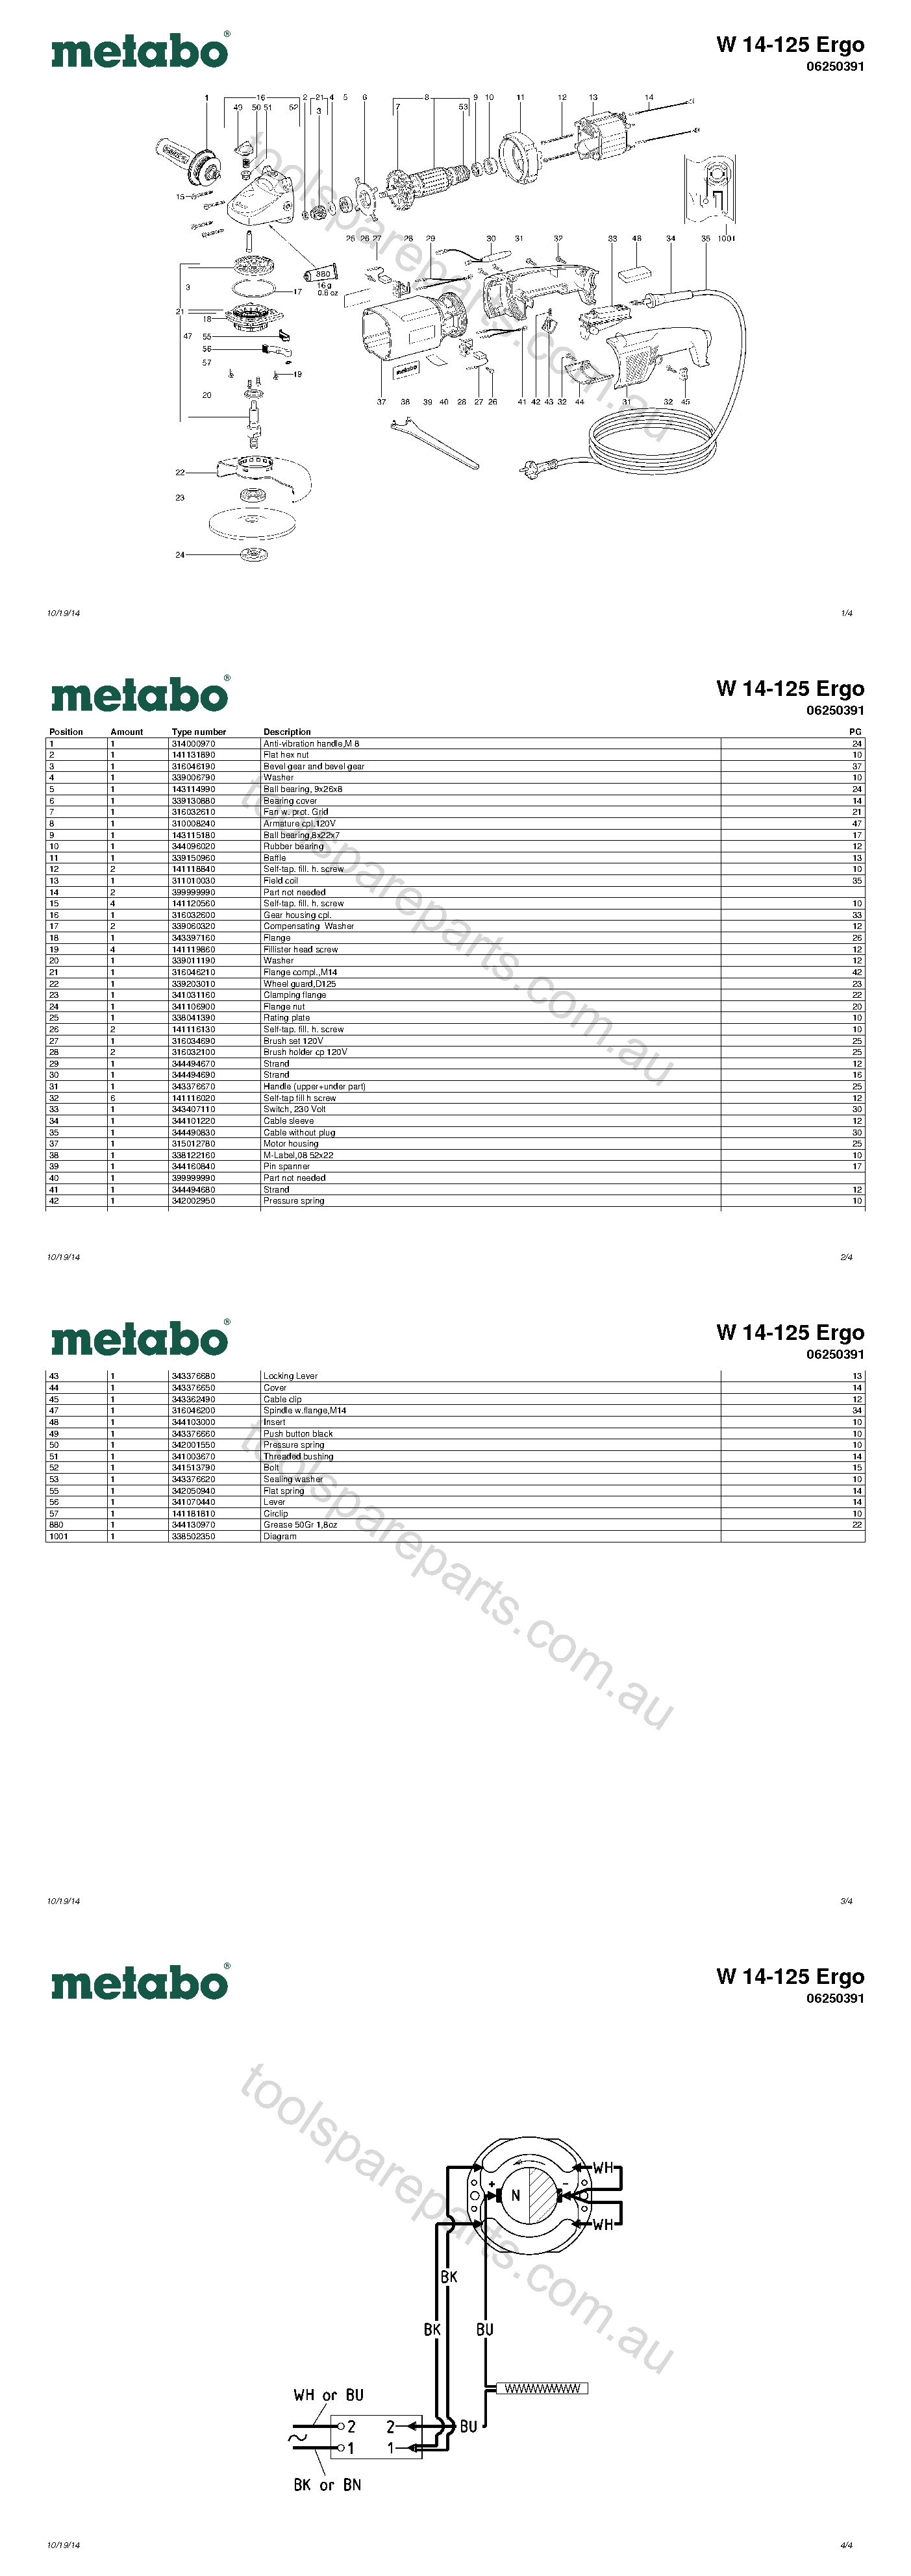 Metabo W 14-125 Ergo 06250391  Diagram 1